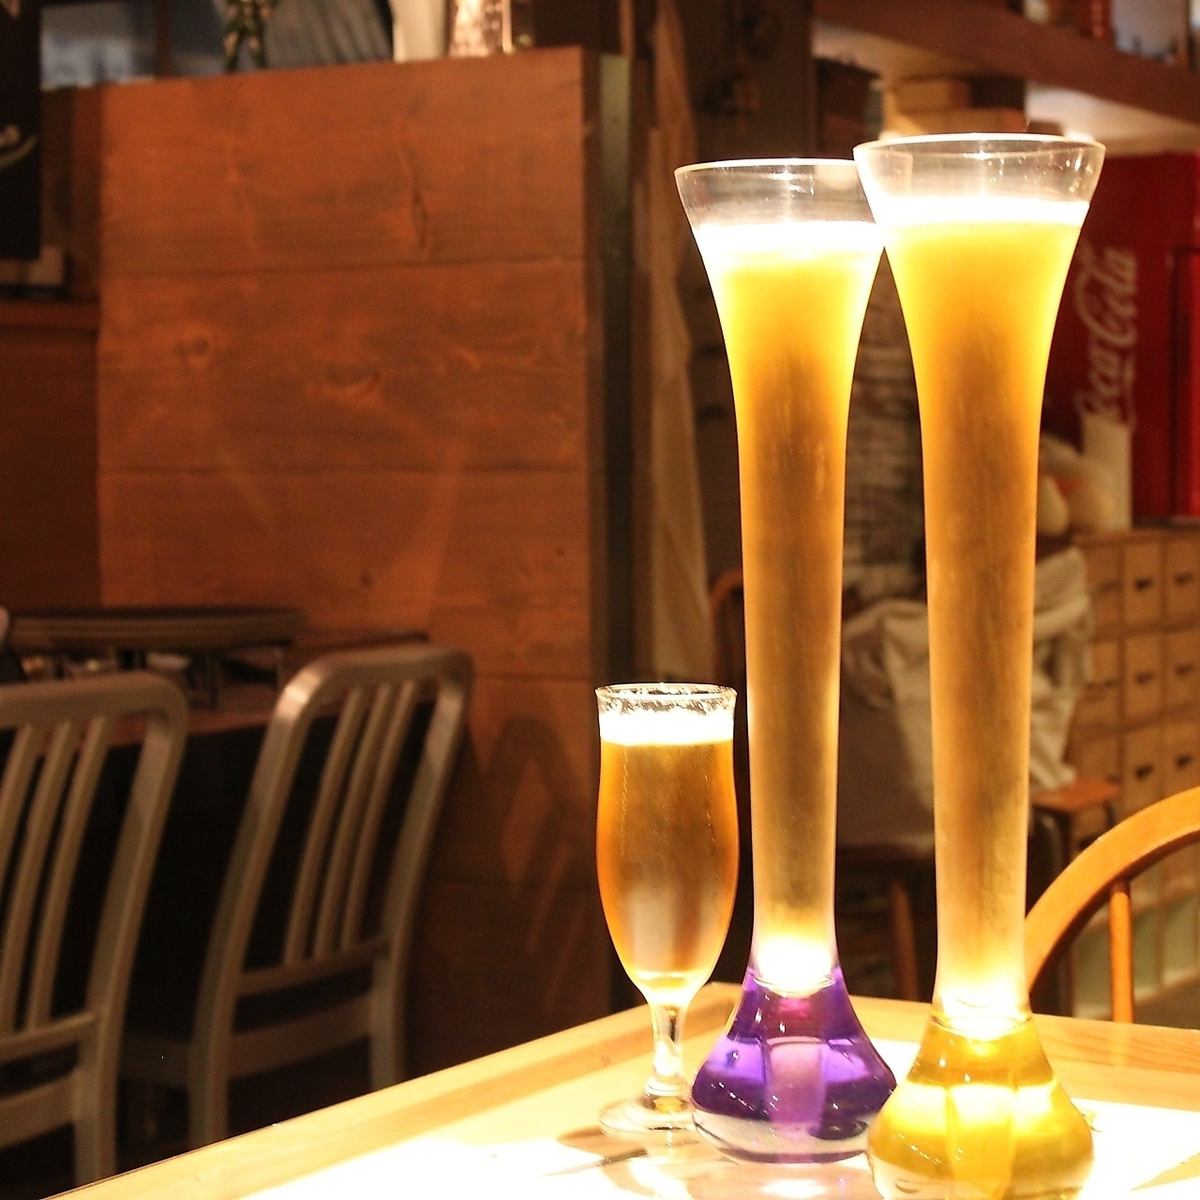 Enjoy the Sapporo Classic in a half-yard glass!